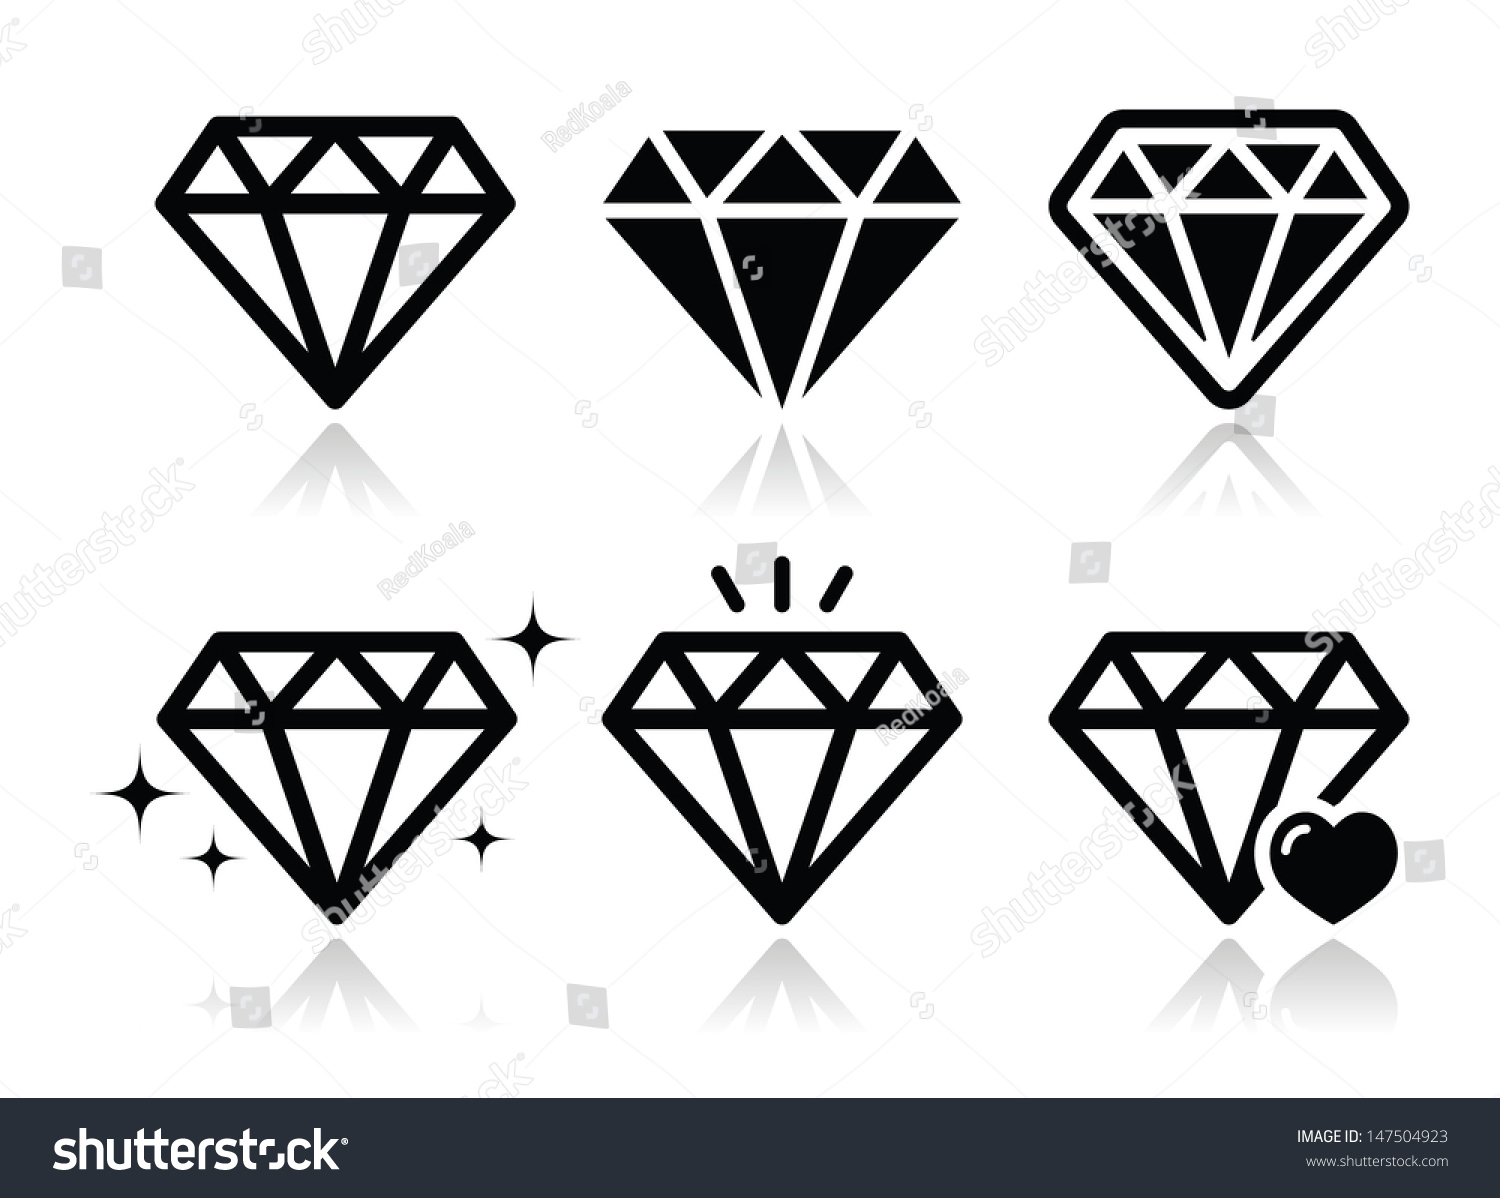 diamond logo clip art - photo #48